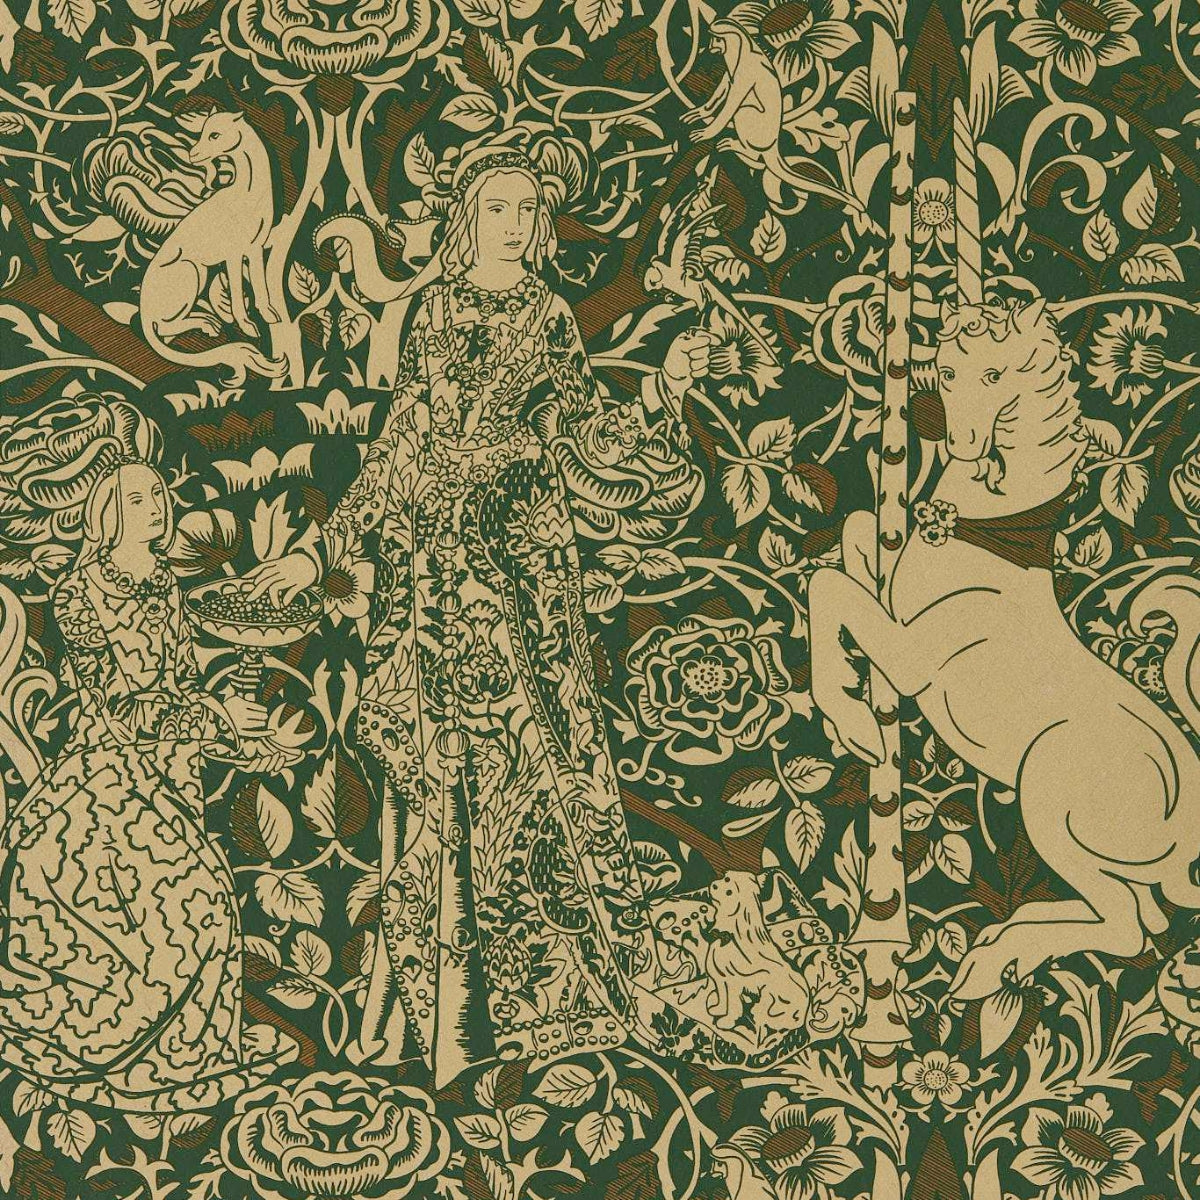 Sanderson x Giles Deacon &#39;Aurelia&#39;s Grail - Gobelin Green/Bronze&#39; Wallpaper